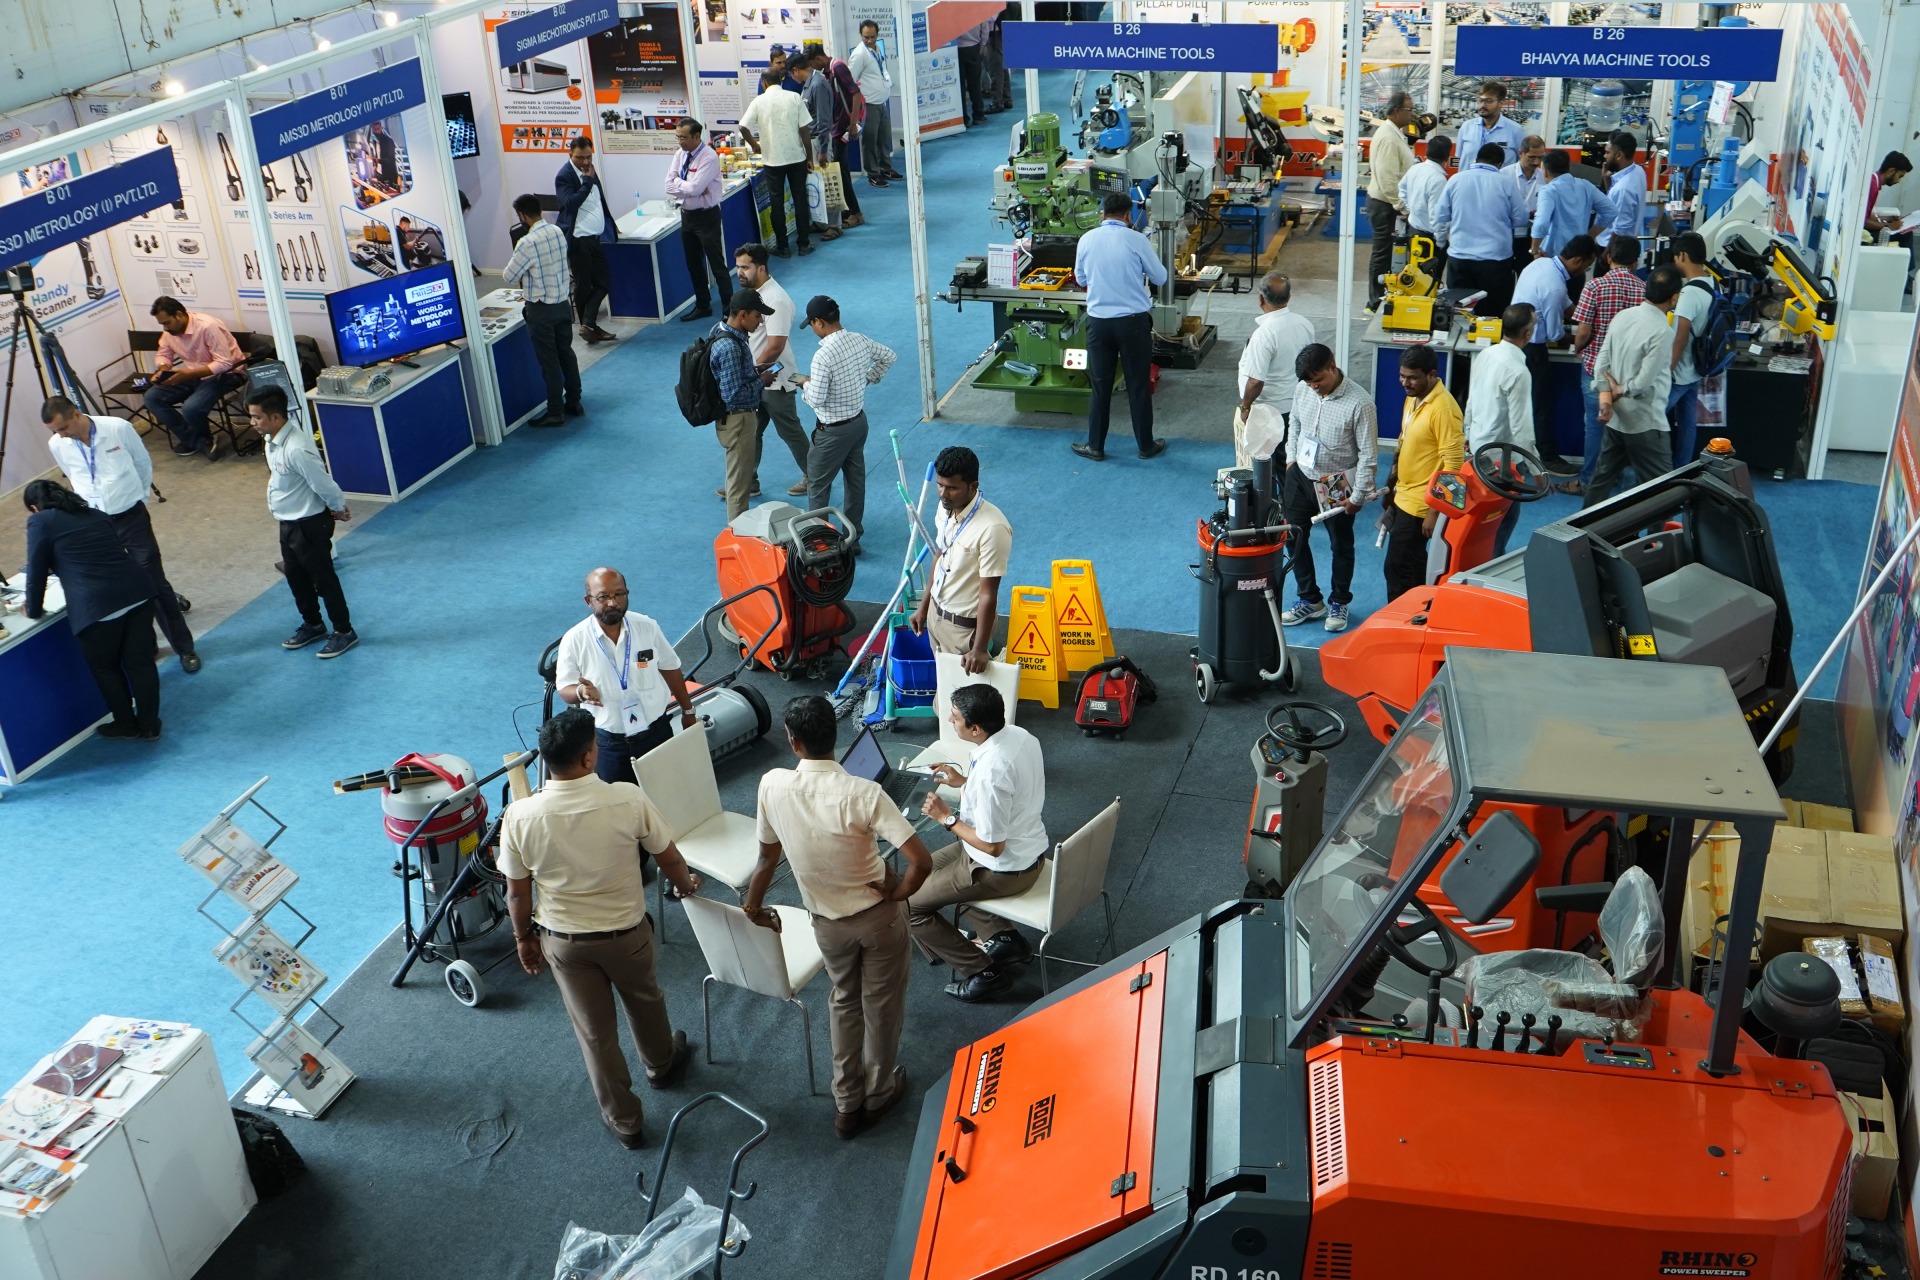 Globe-Tech Engineering Expo Pune - 2022, Globe-Tech Engineering Expo – Pune